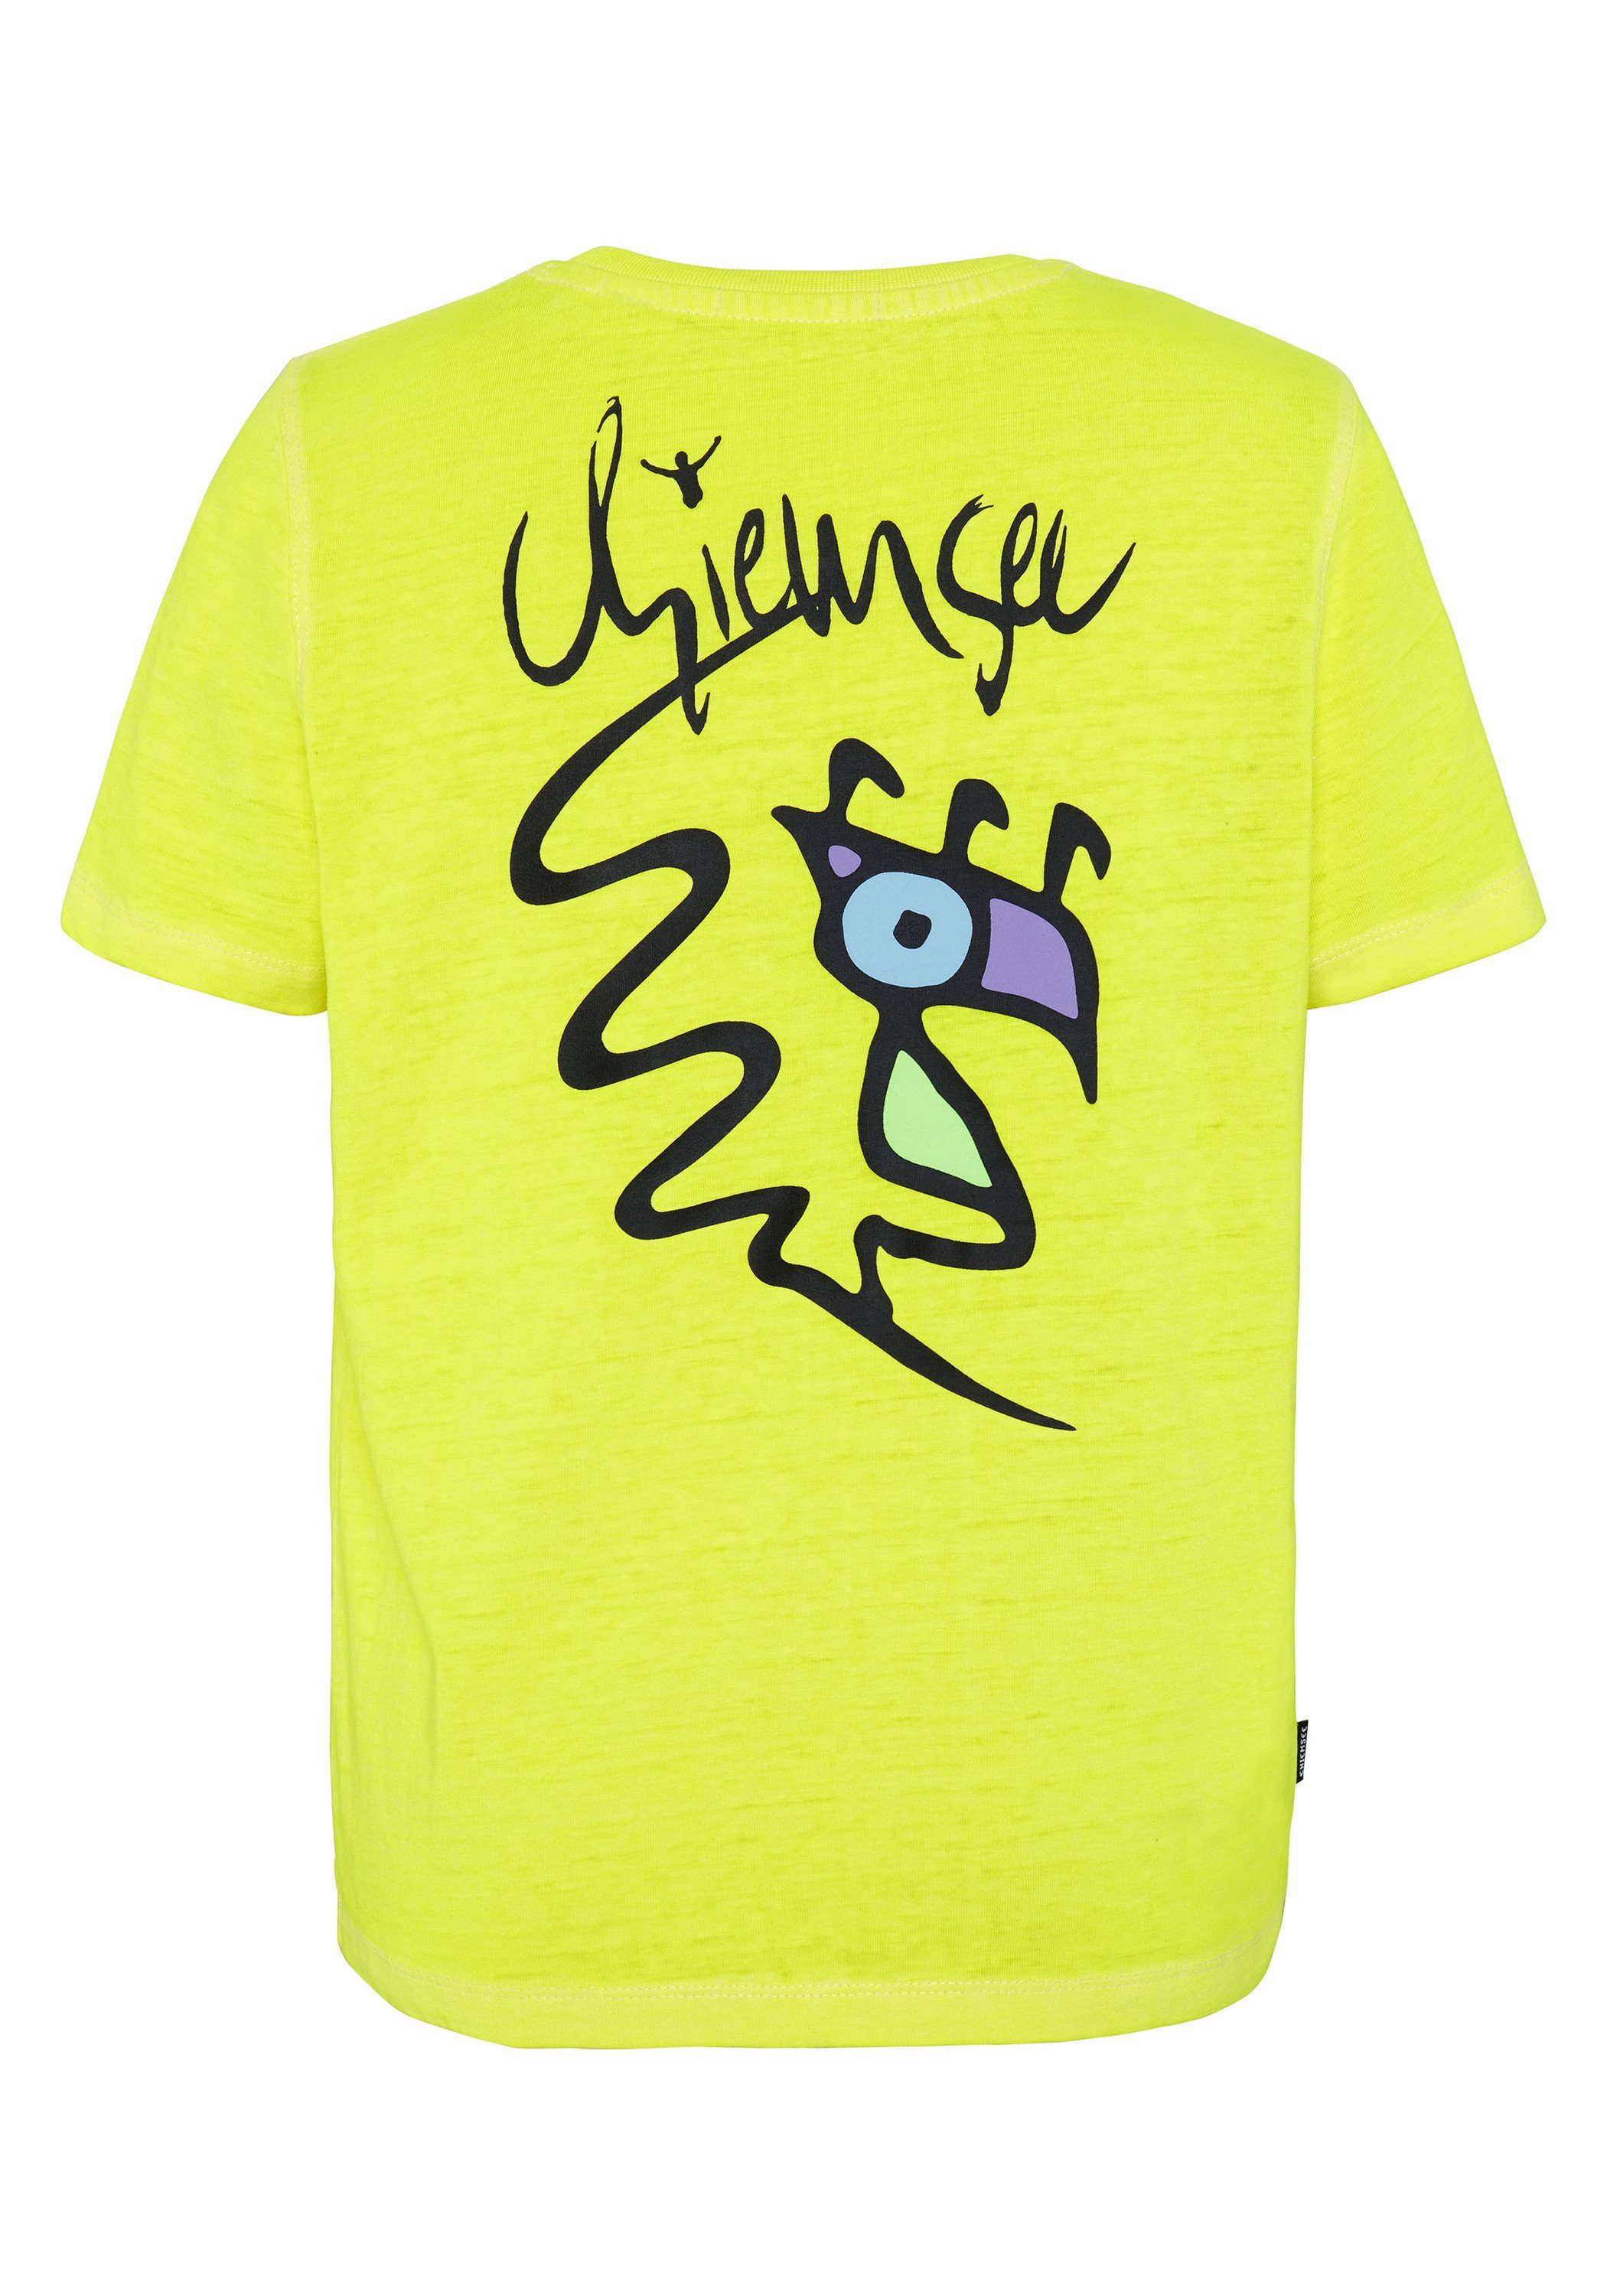 T-Shirt Print-Shirt Tonic im Lemon 1 Art-Logo-Look Chiemsee